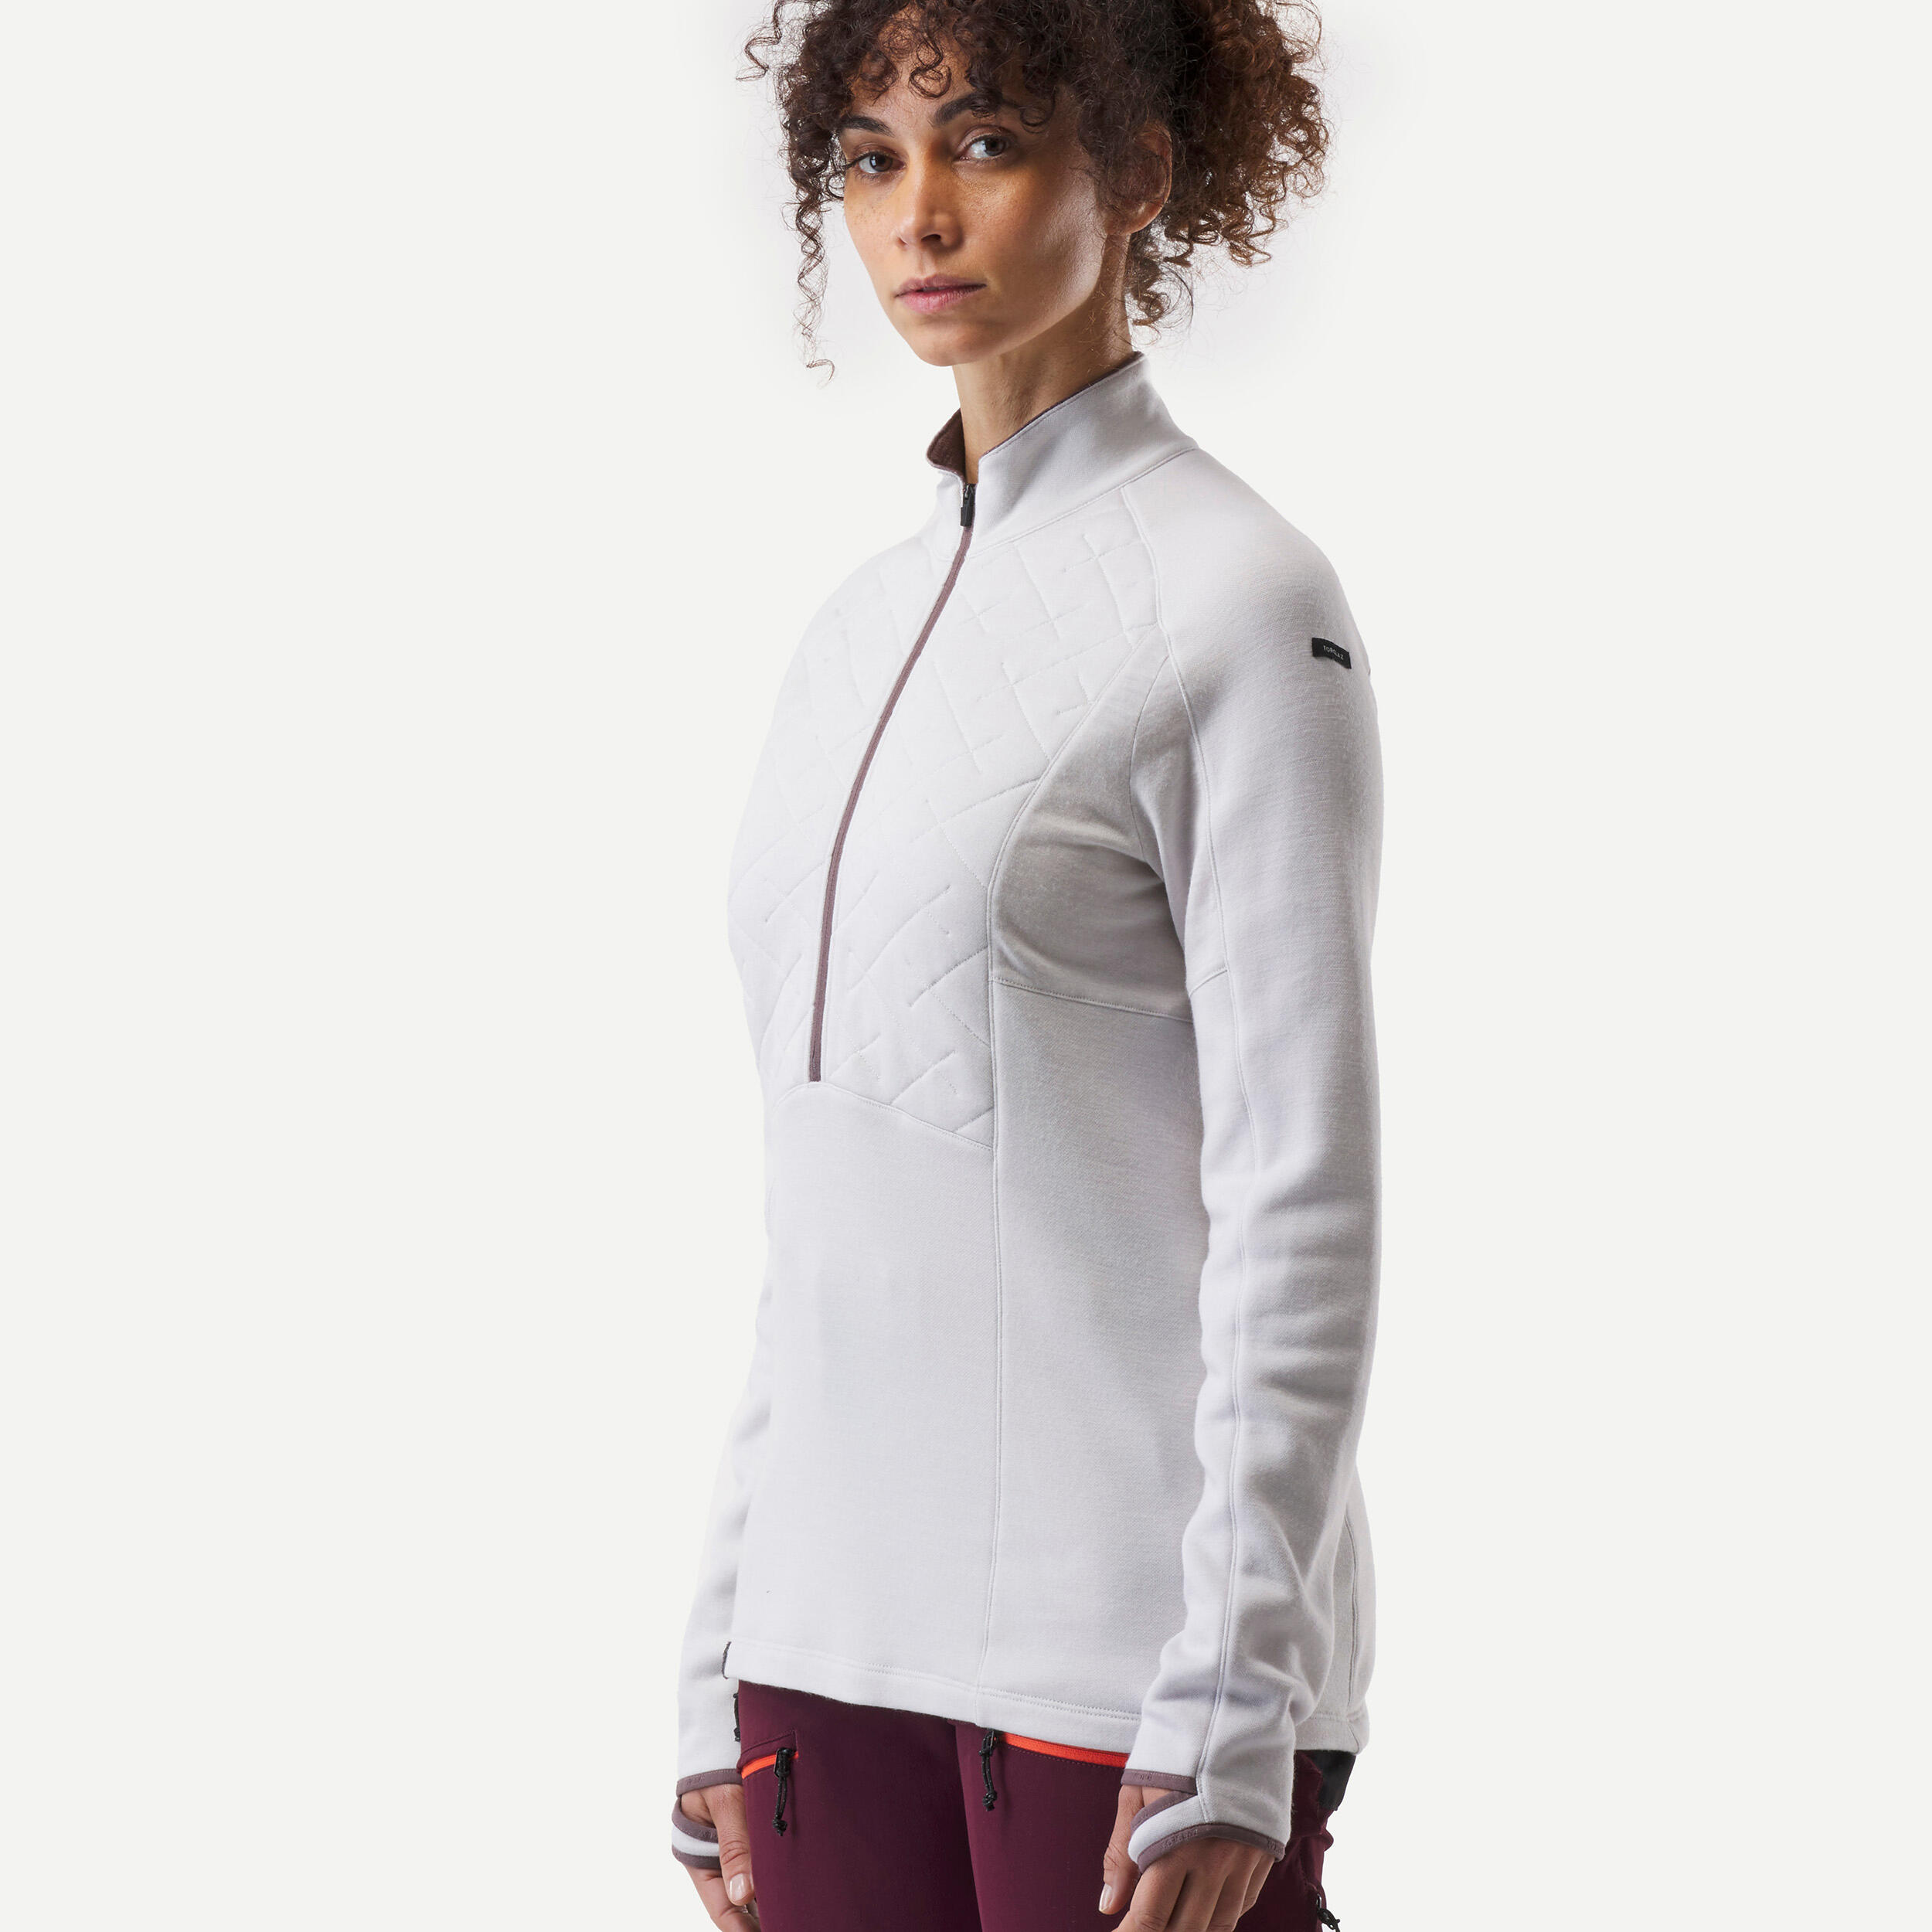 Women's Merino Wool Long-Sleeved Trekking T-Shirt - MT900 7/10